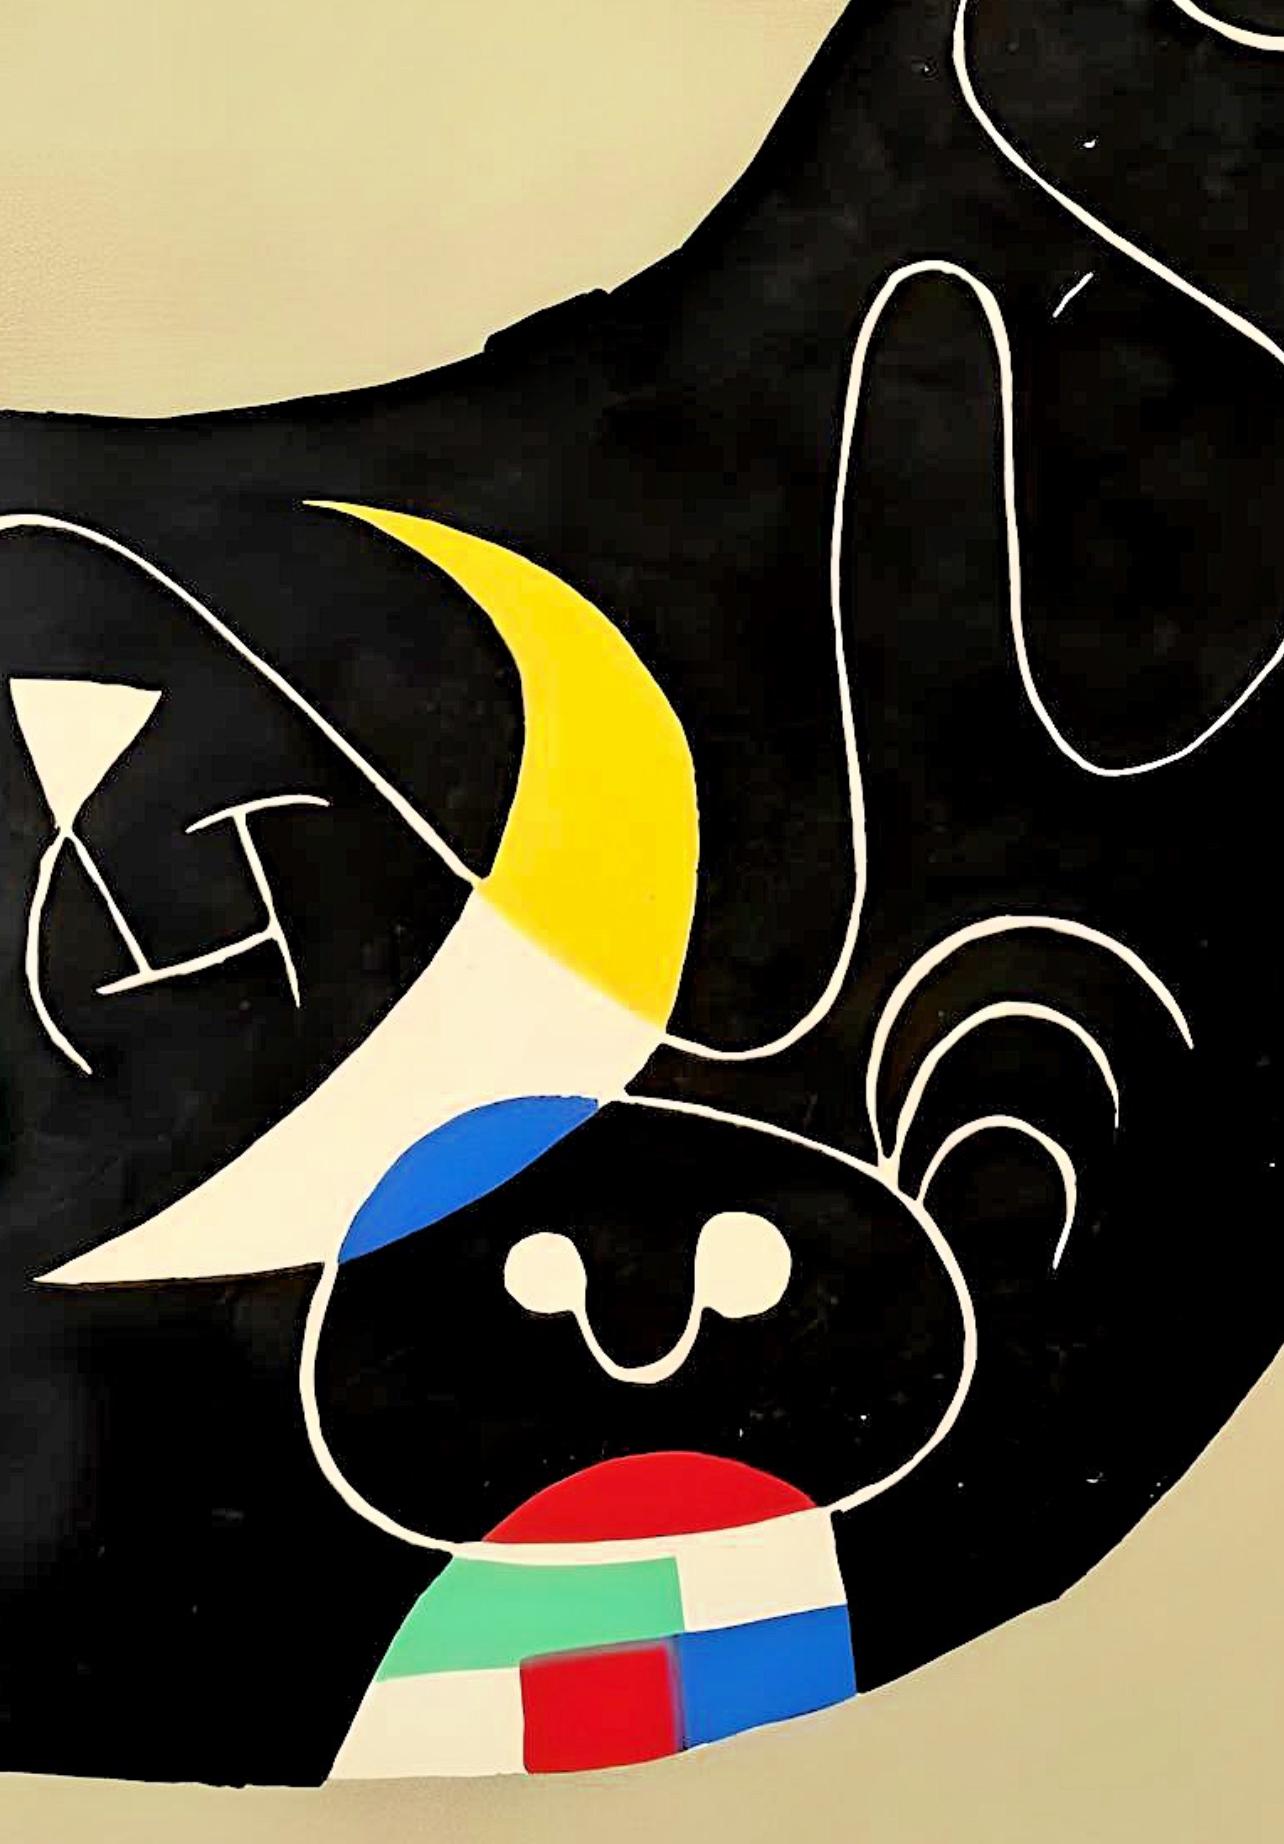 Miro, Composition (Mourlot 232; Cramer 39) (after) - Print by Joan Miró